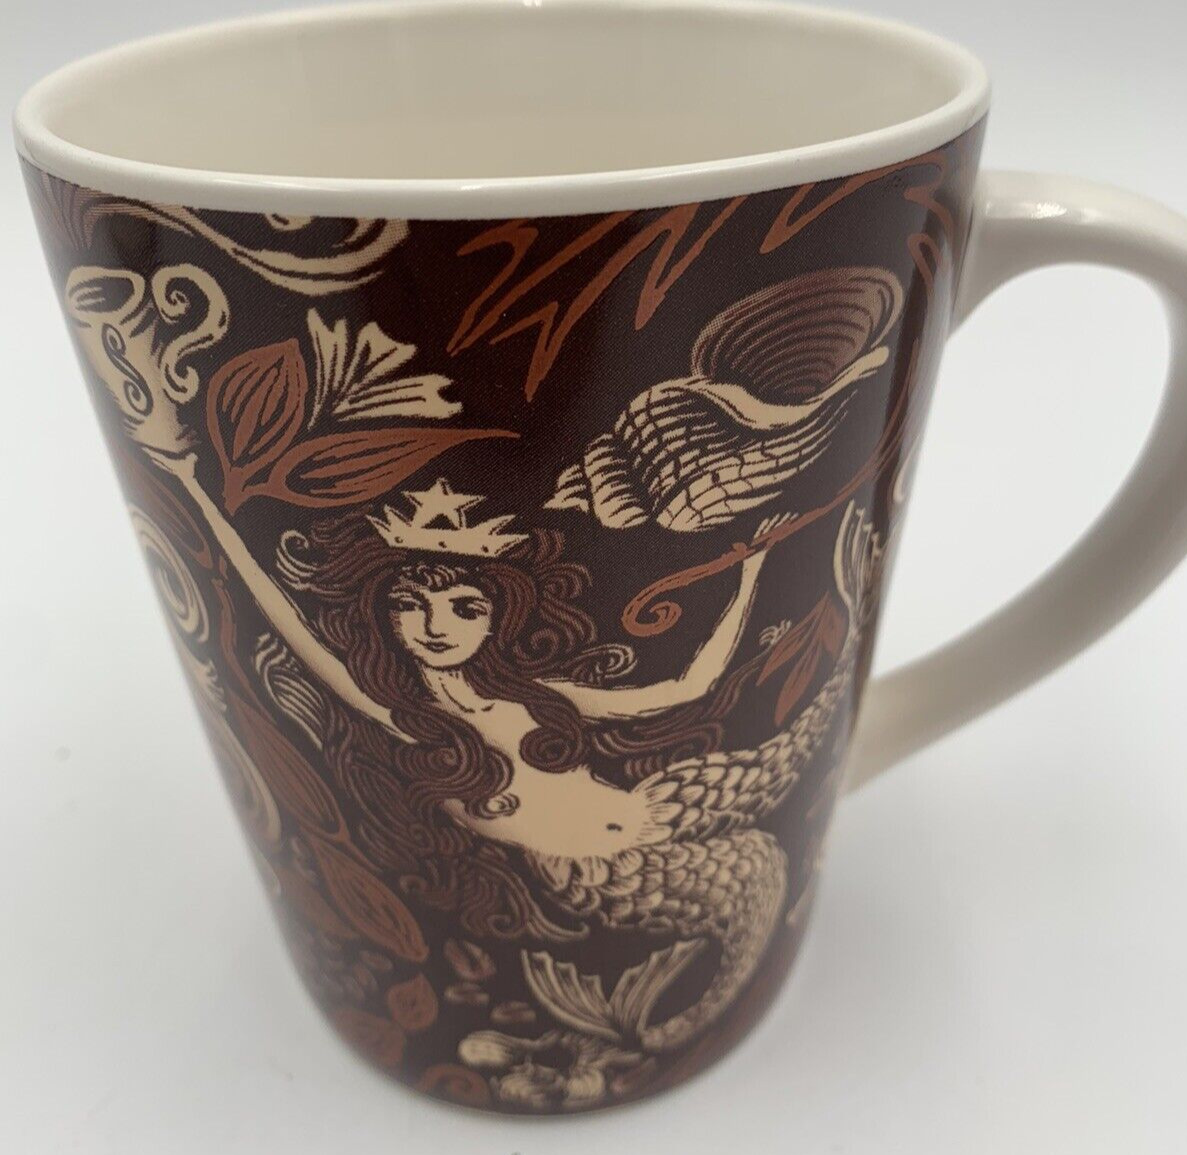 2007 Starbucks Coffee Mug 35TH Anniversary Mermaid Siren Brown/Copper